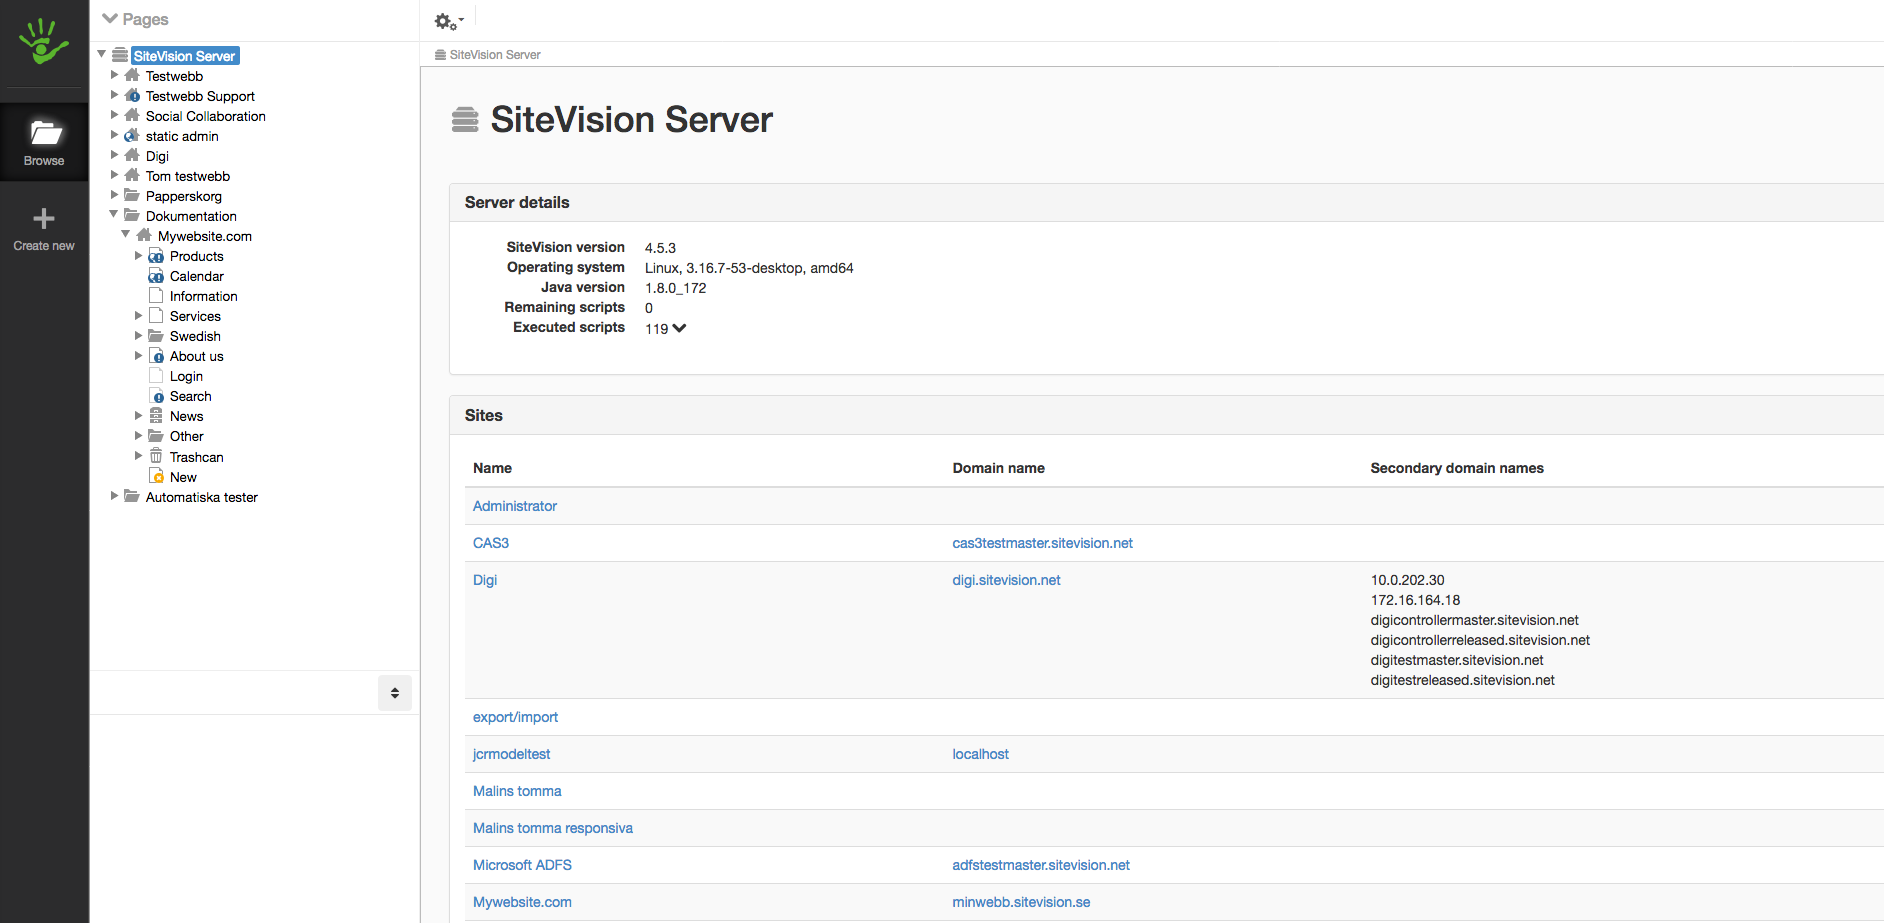 SiteVision Server